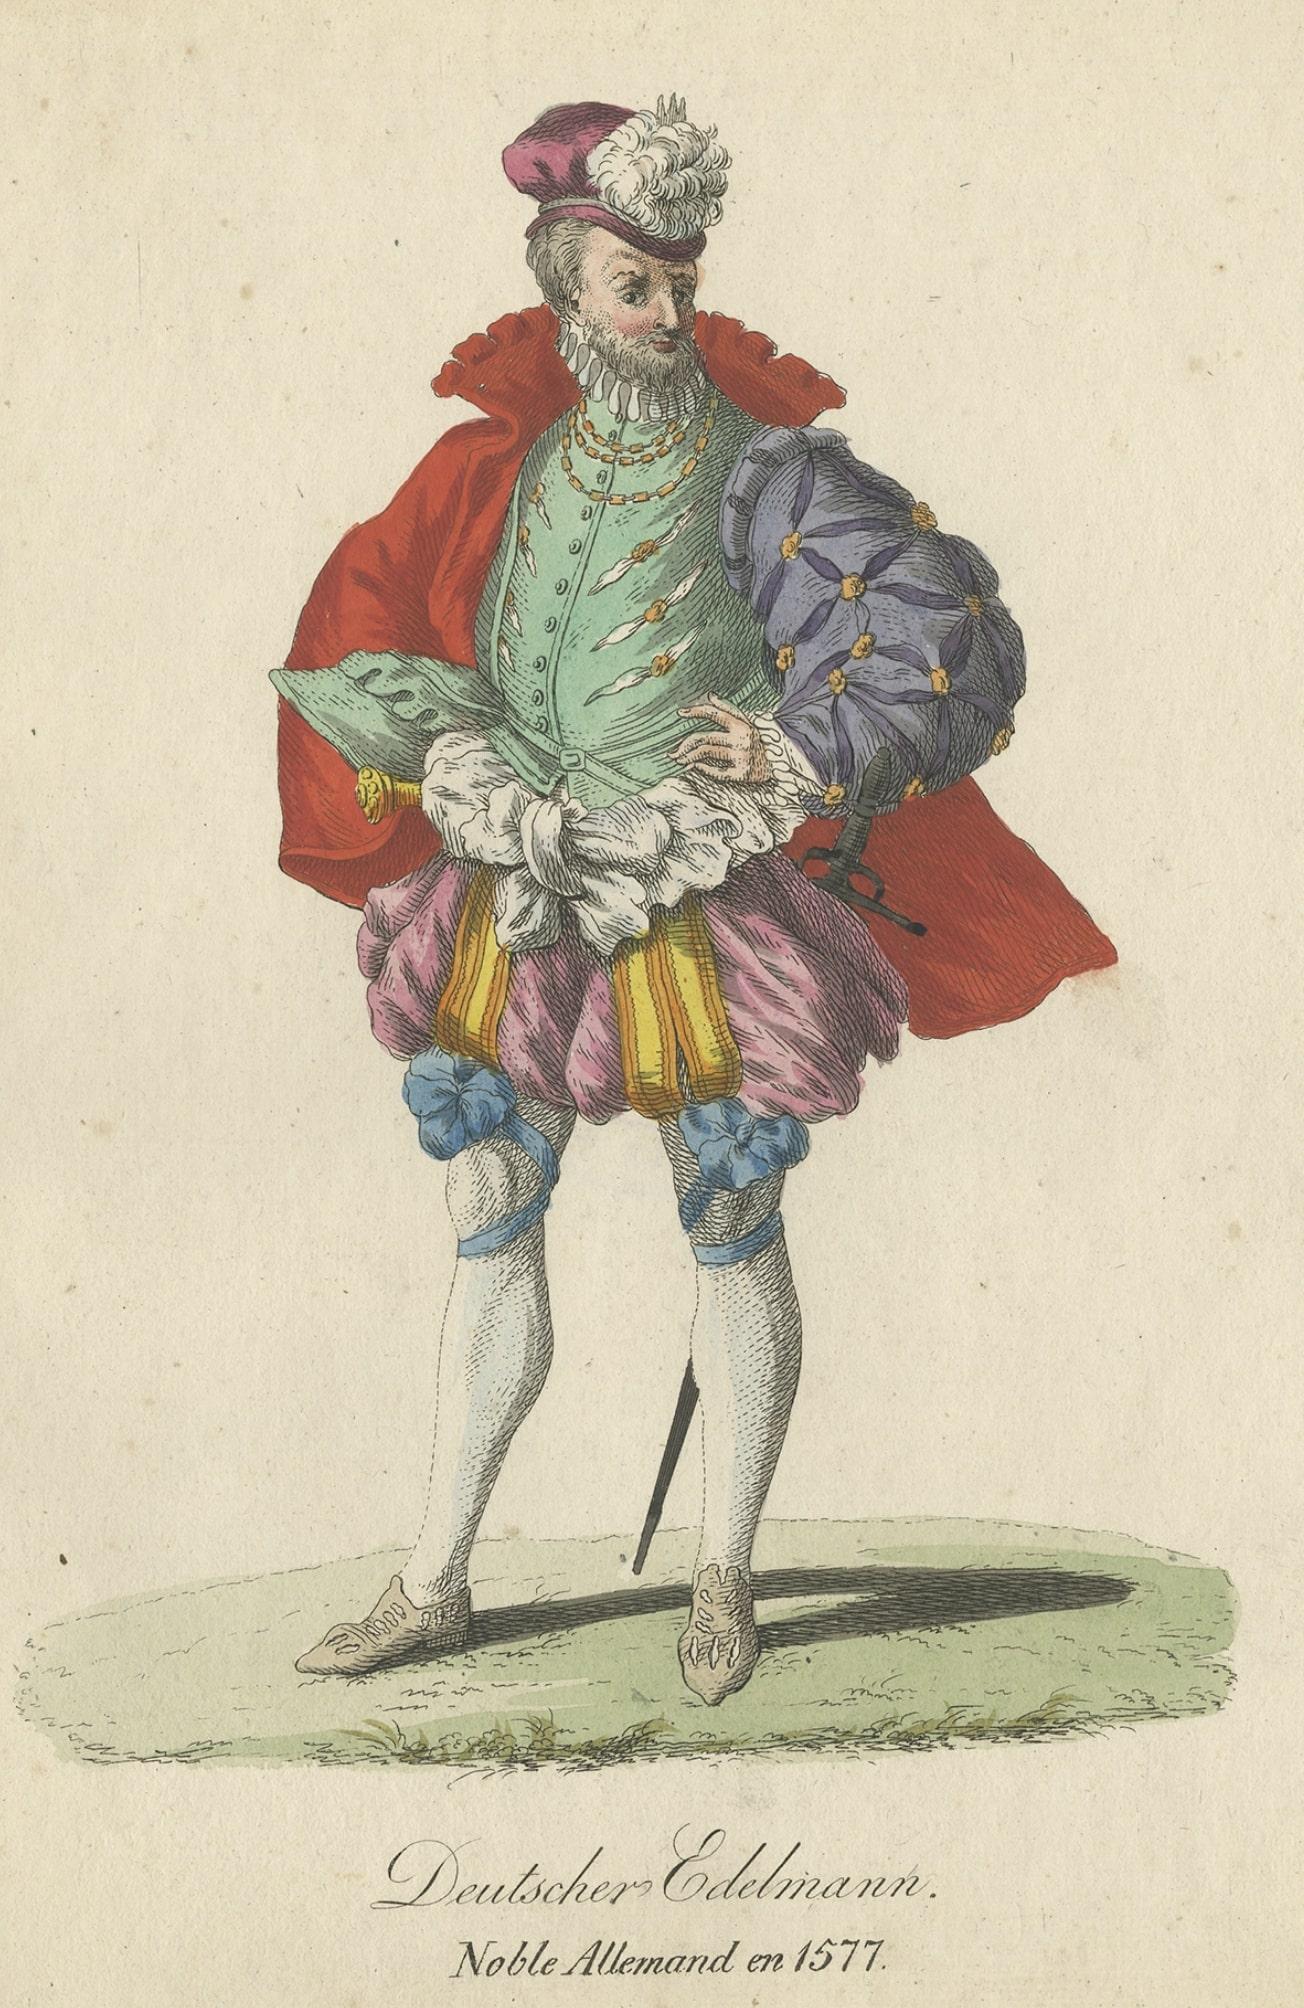 16th century nobleman